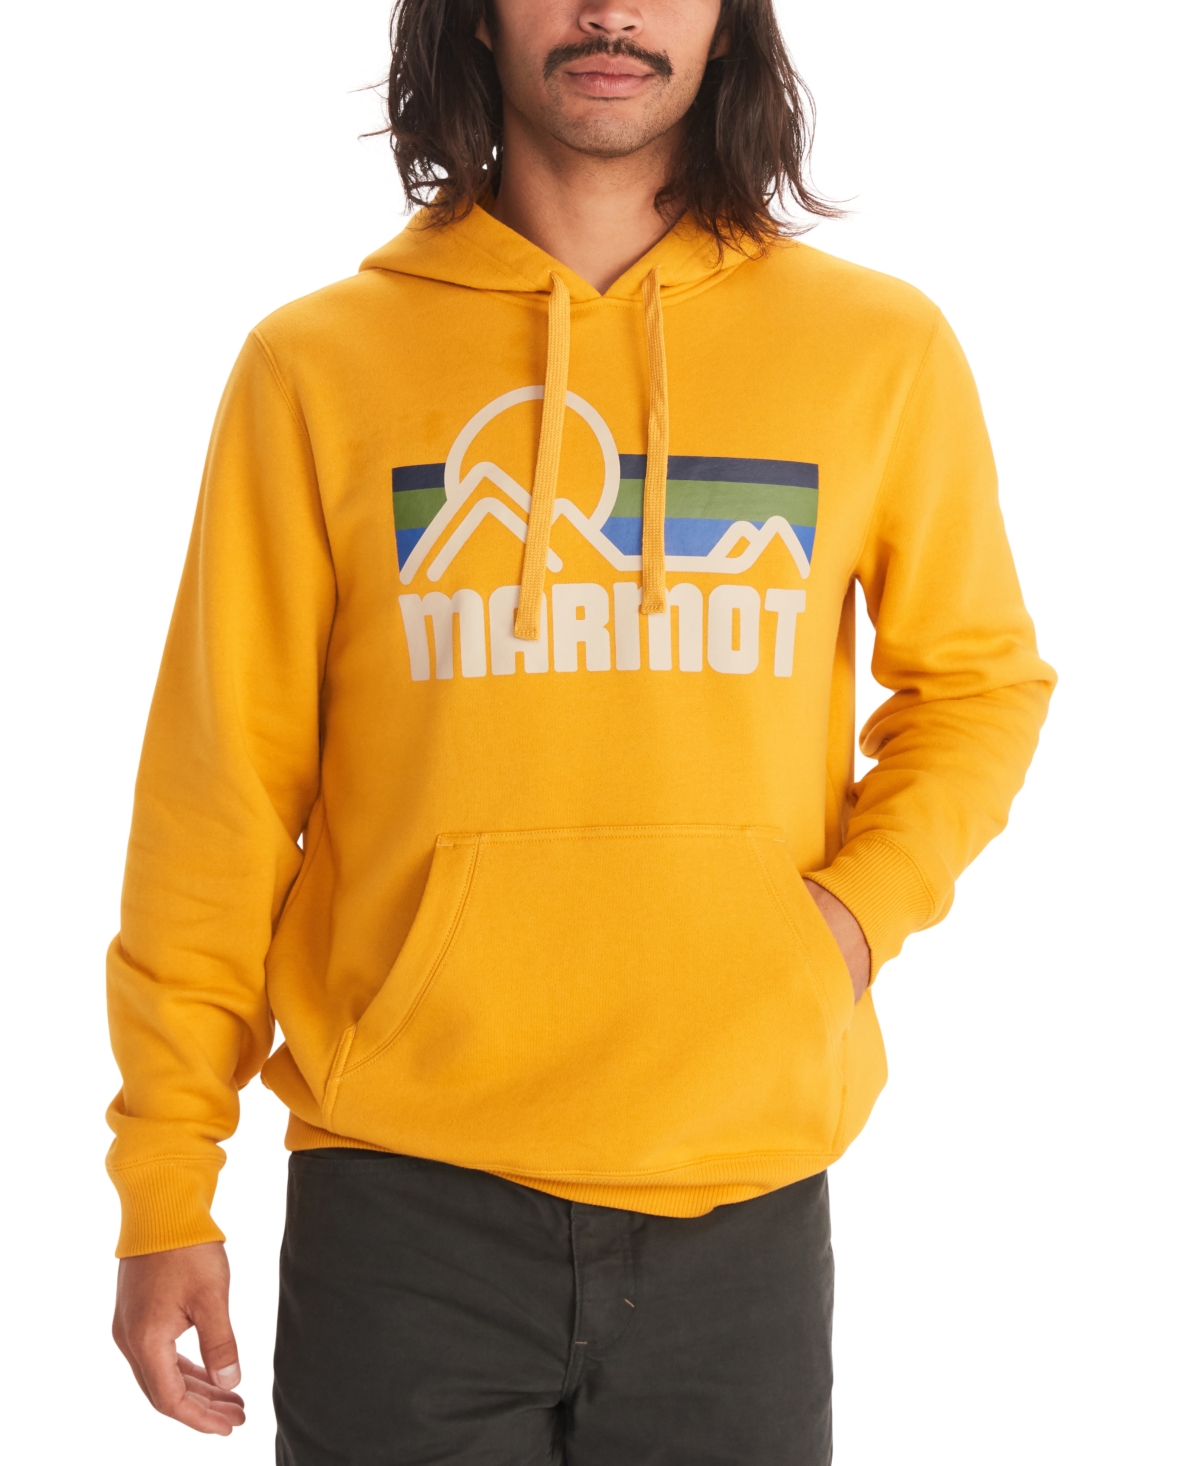 Marmot Men's Coastal Hoodie Pullover Sweatshirt